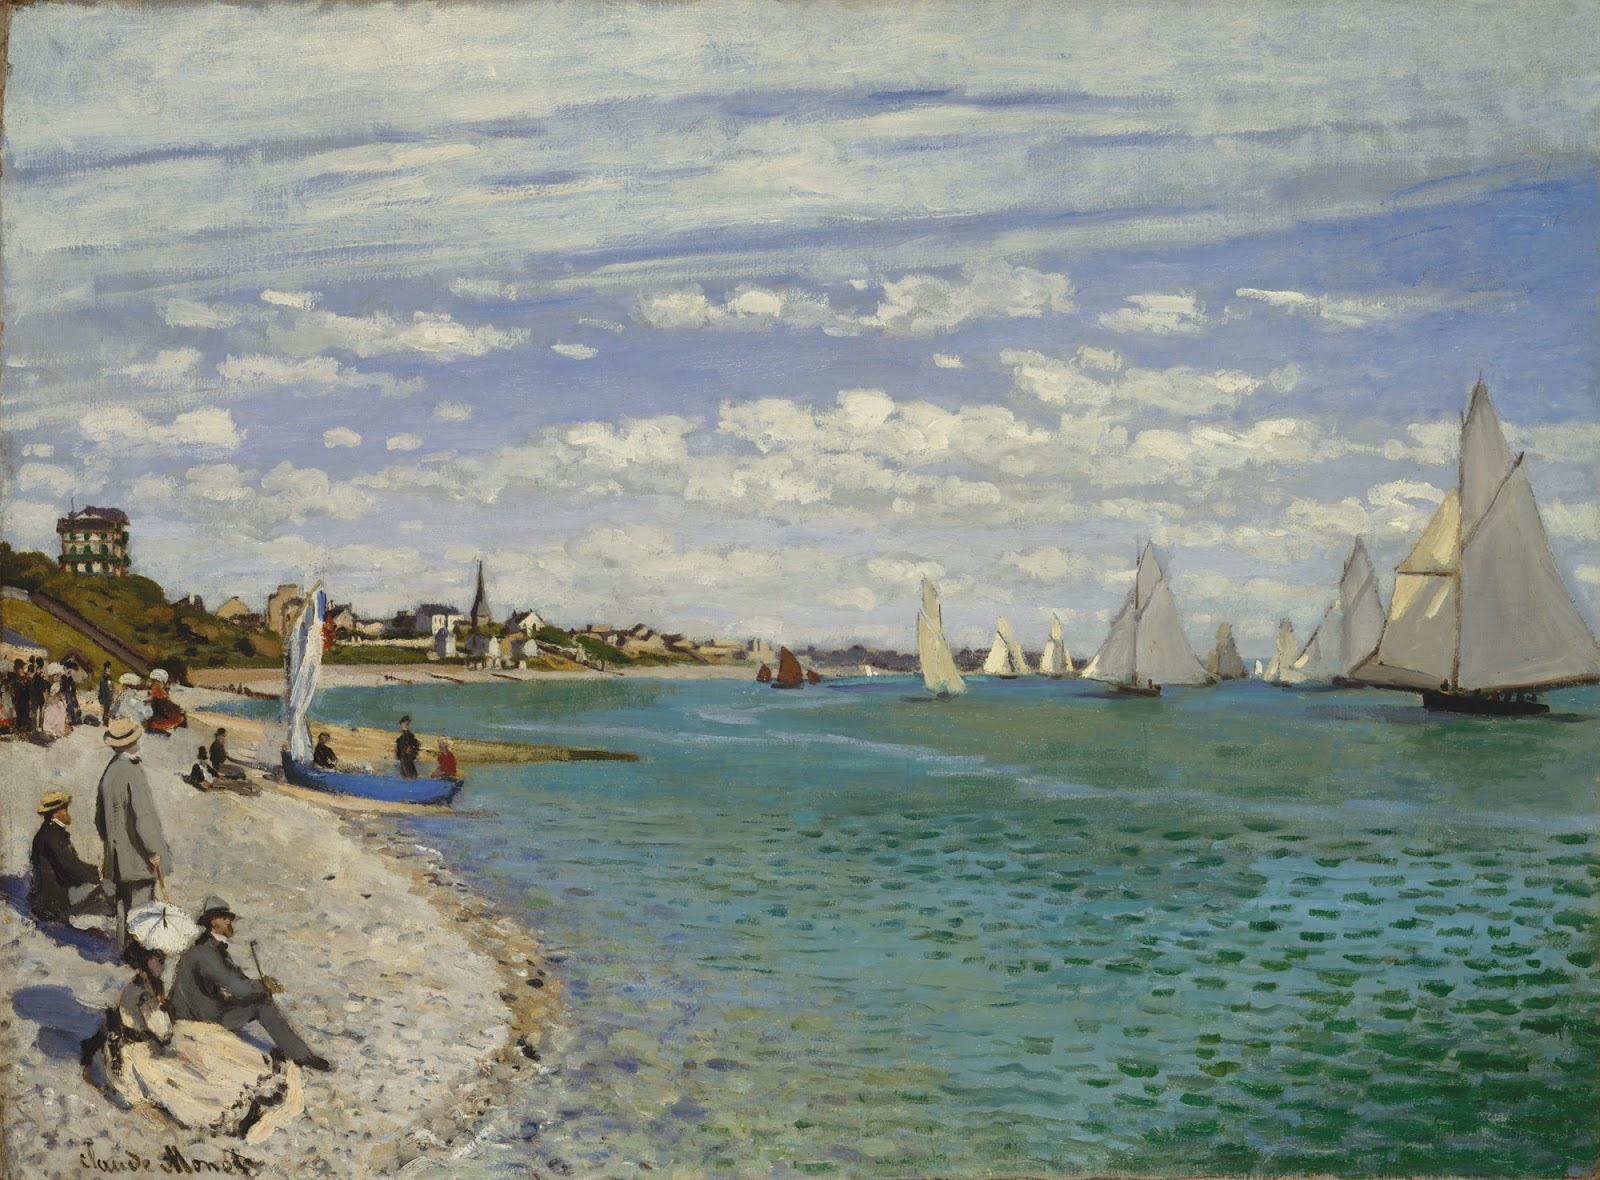 Claude+Monet-1840-1926 (611).jpg